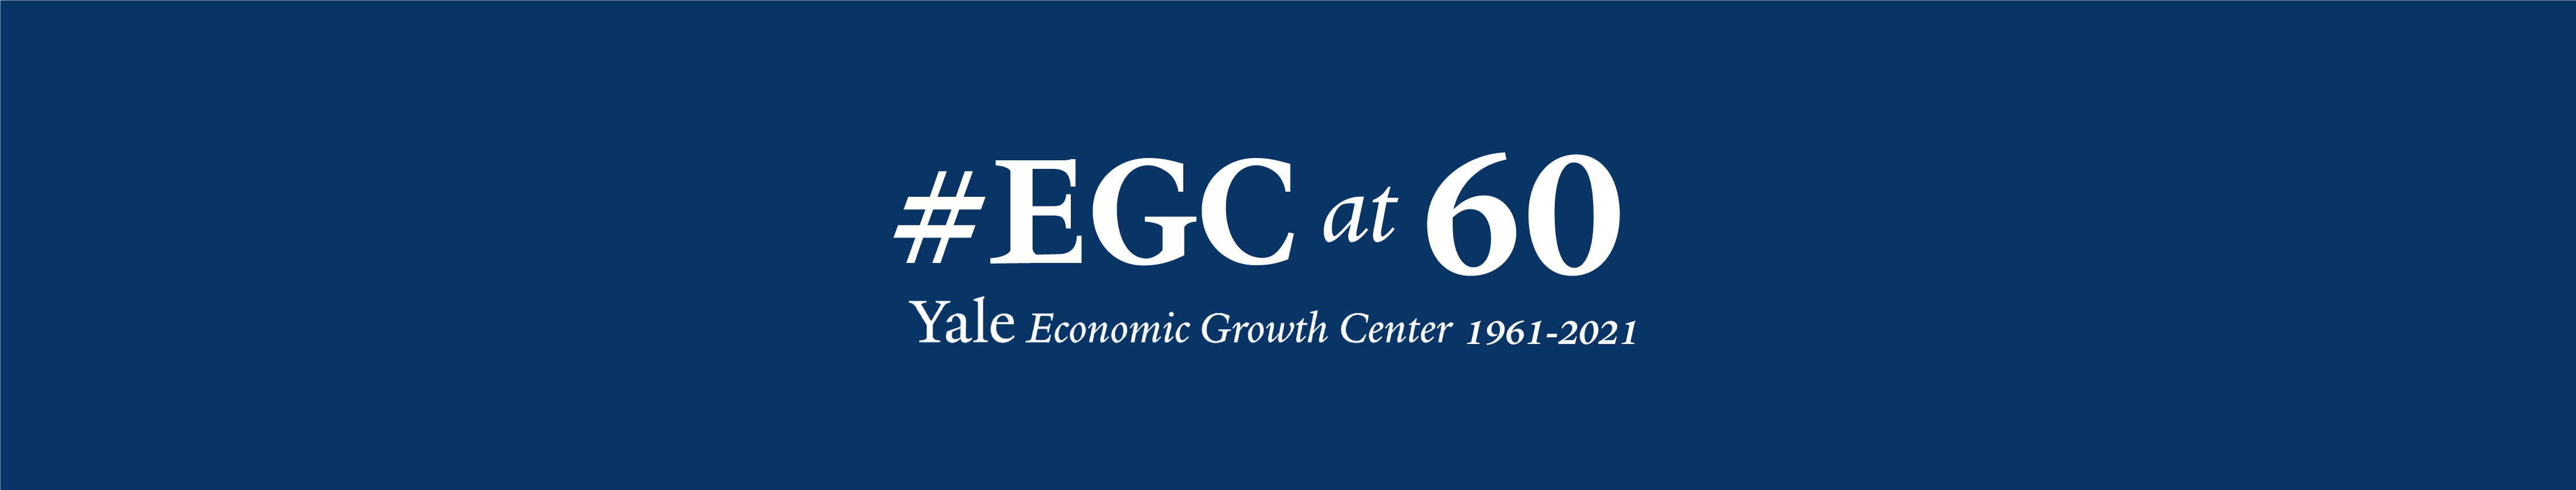 #EGCat60 hashtag banner